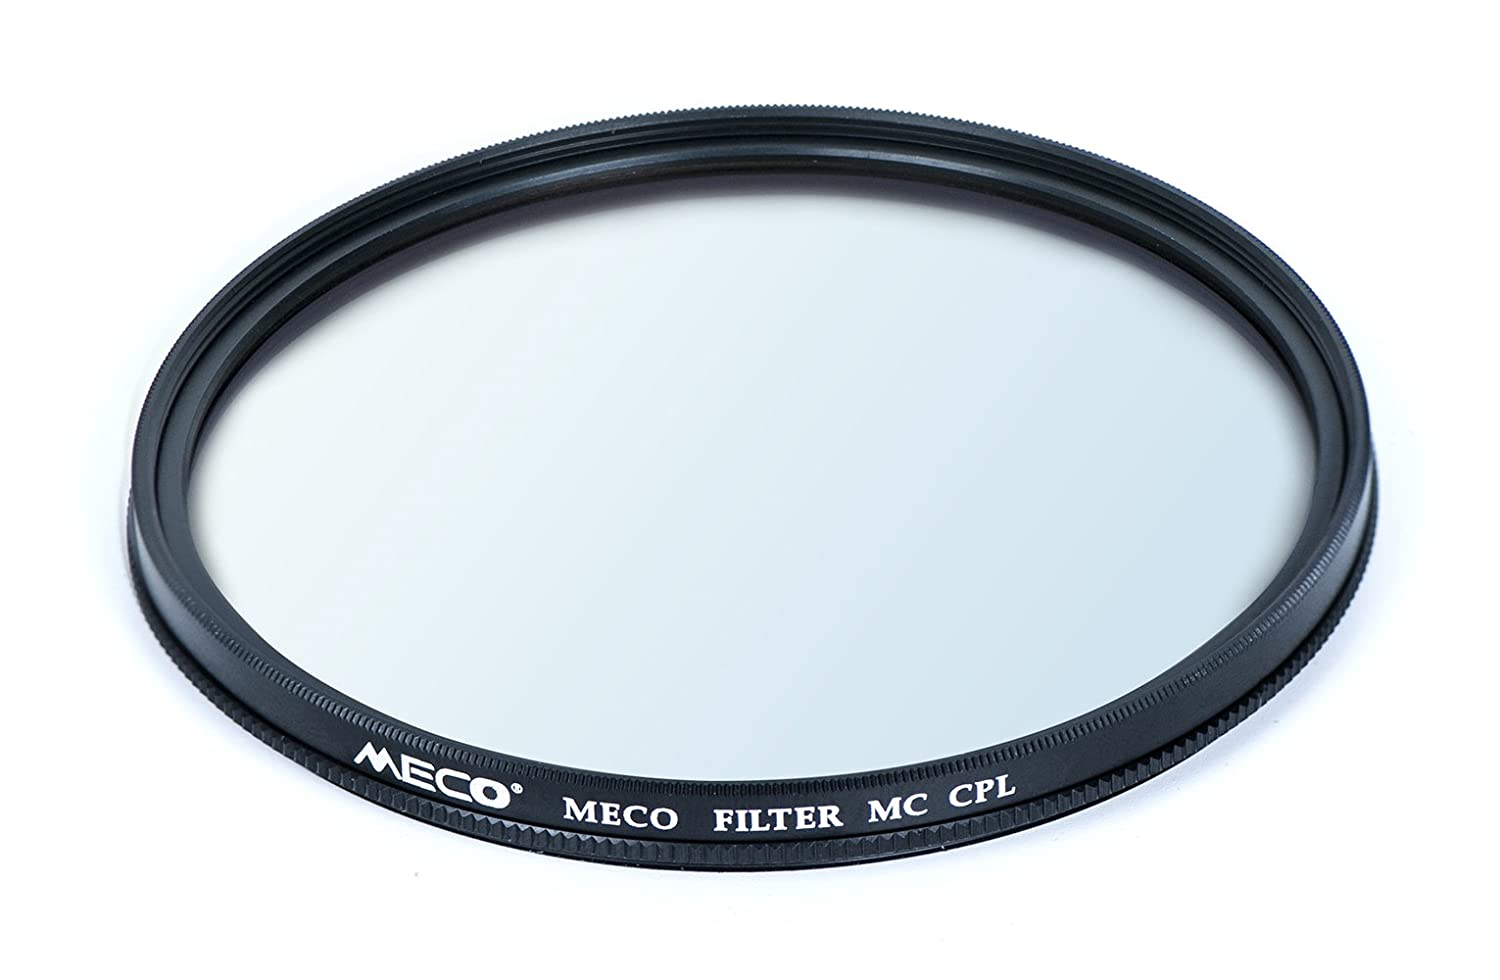 Meco 86mm MC CPL Filter - The Camerashop